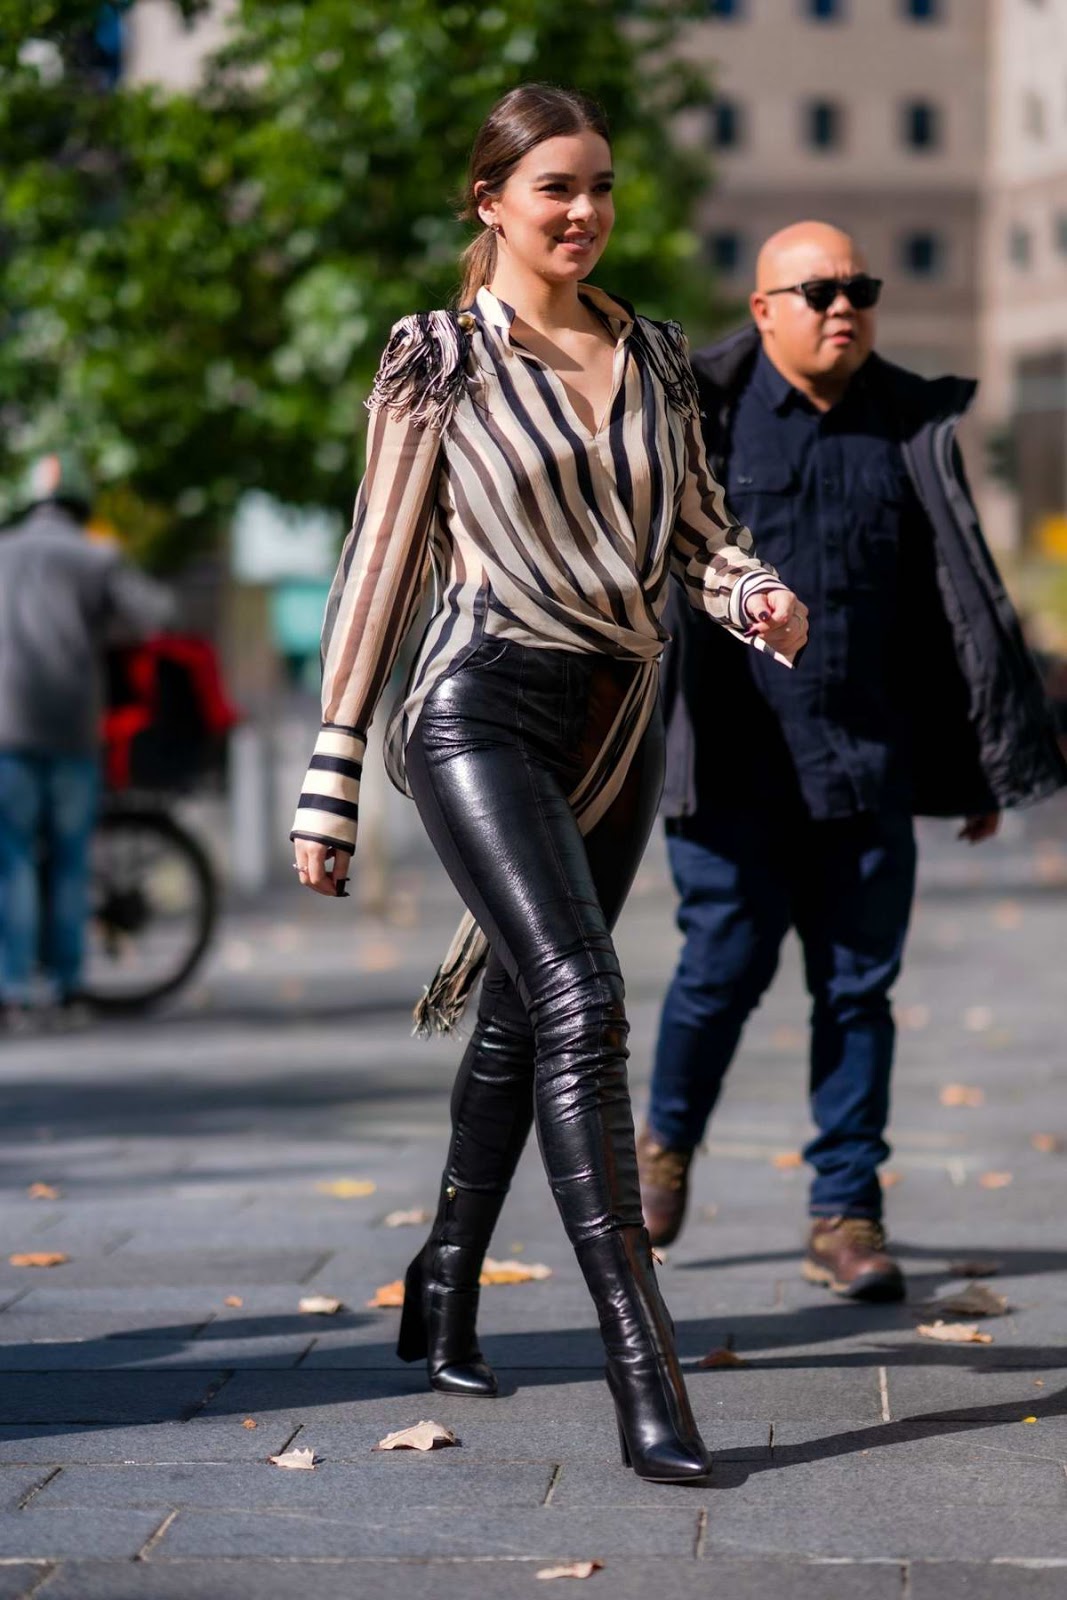 Hailee Steinfeld female celebrity high street style fashion in New York City